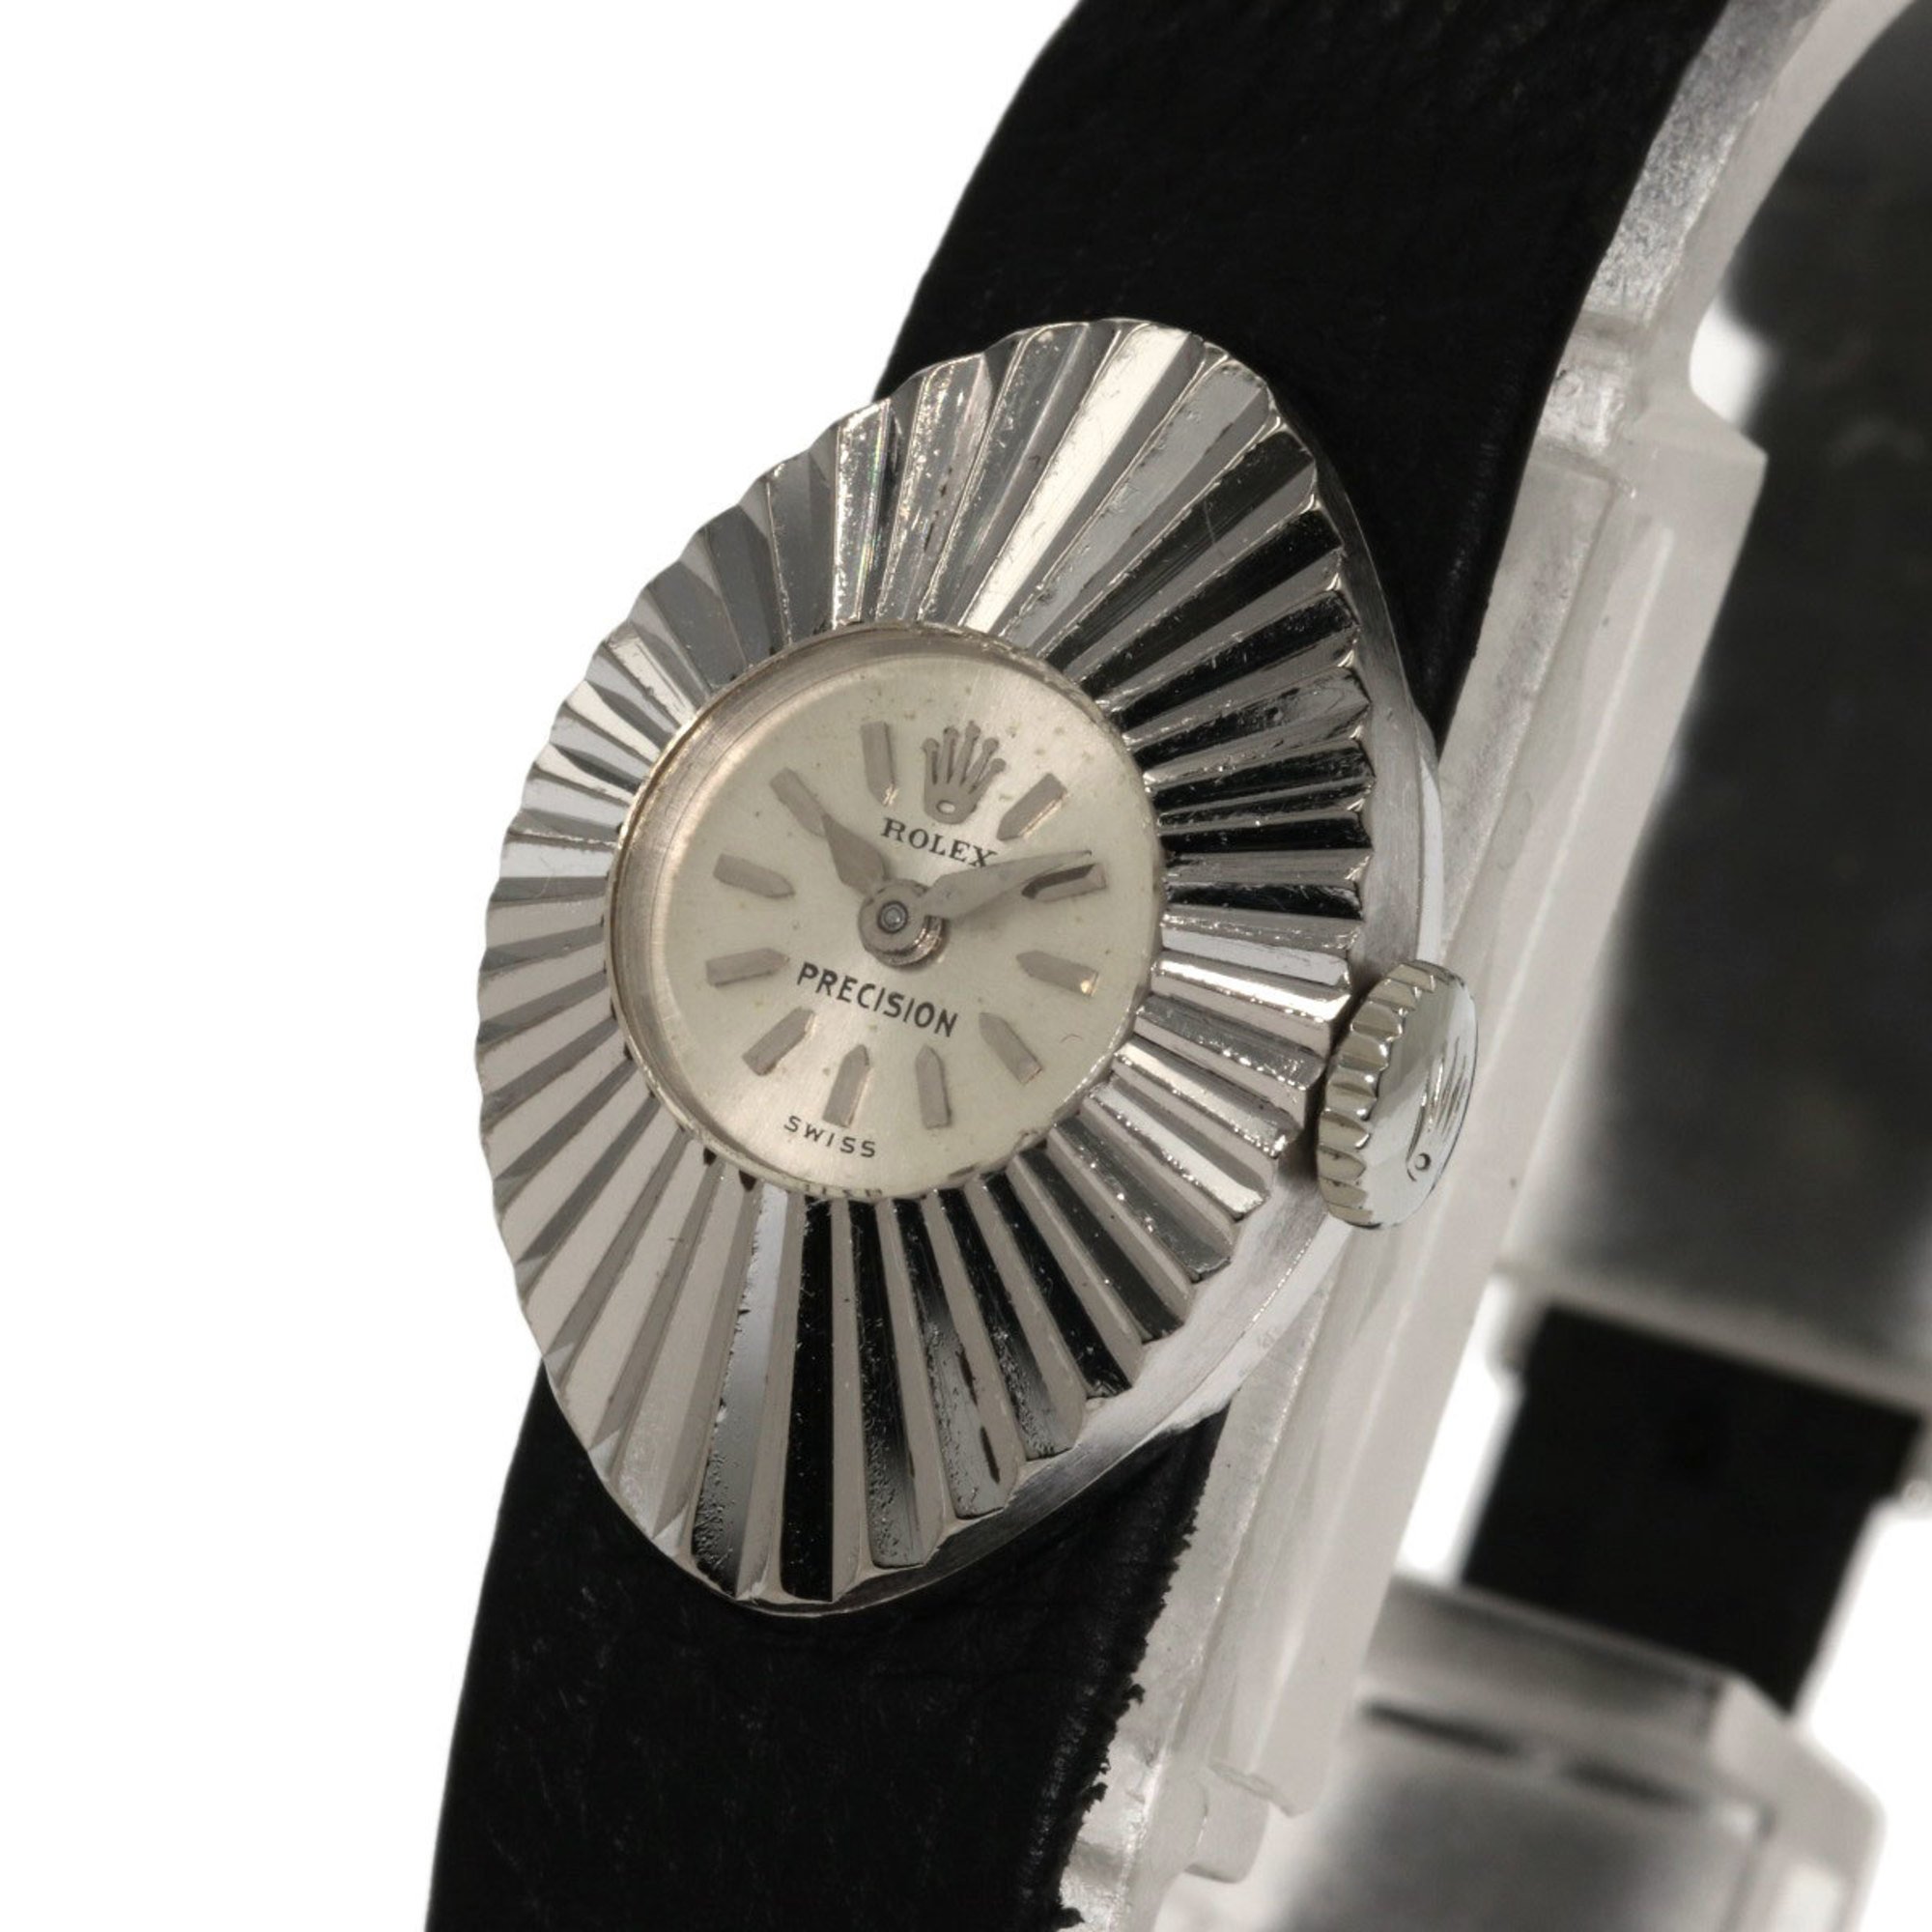 Rolex 2000 chameleon made in 1951 almond watch K18 white gold/leather ladies ROLEX